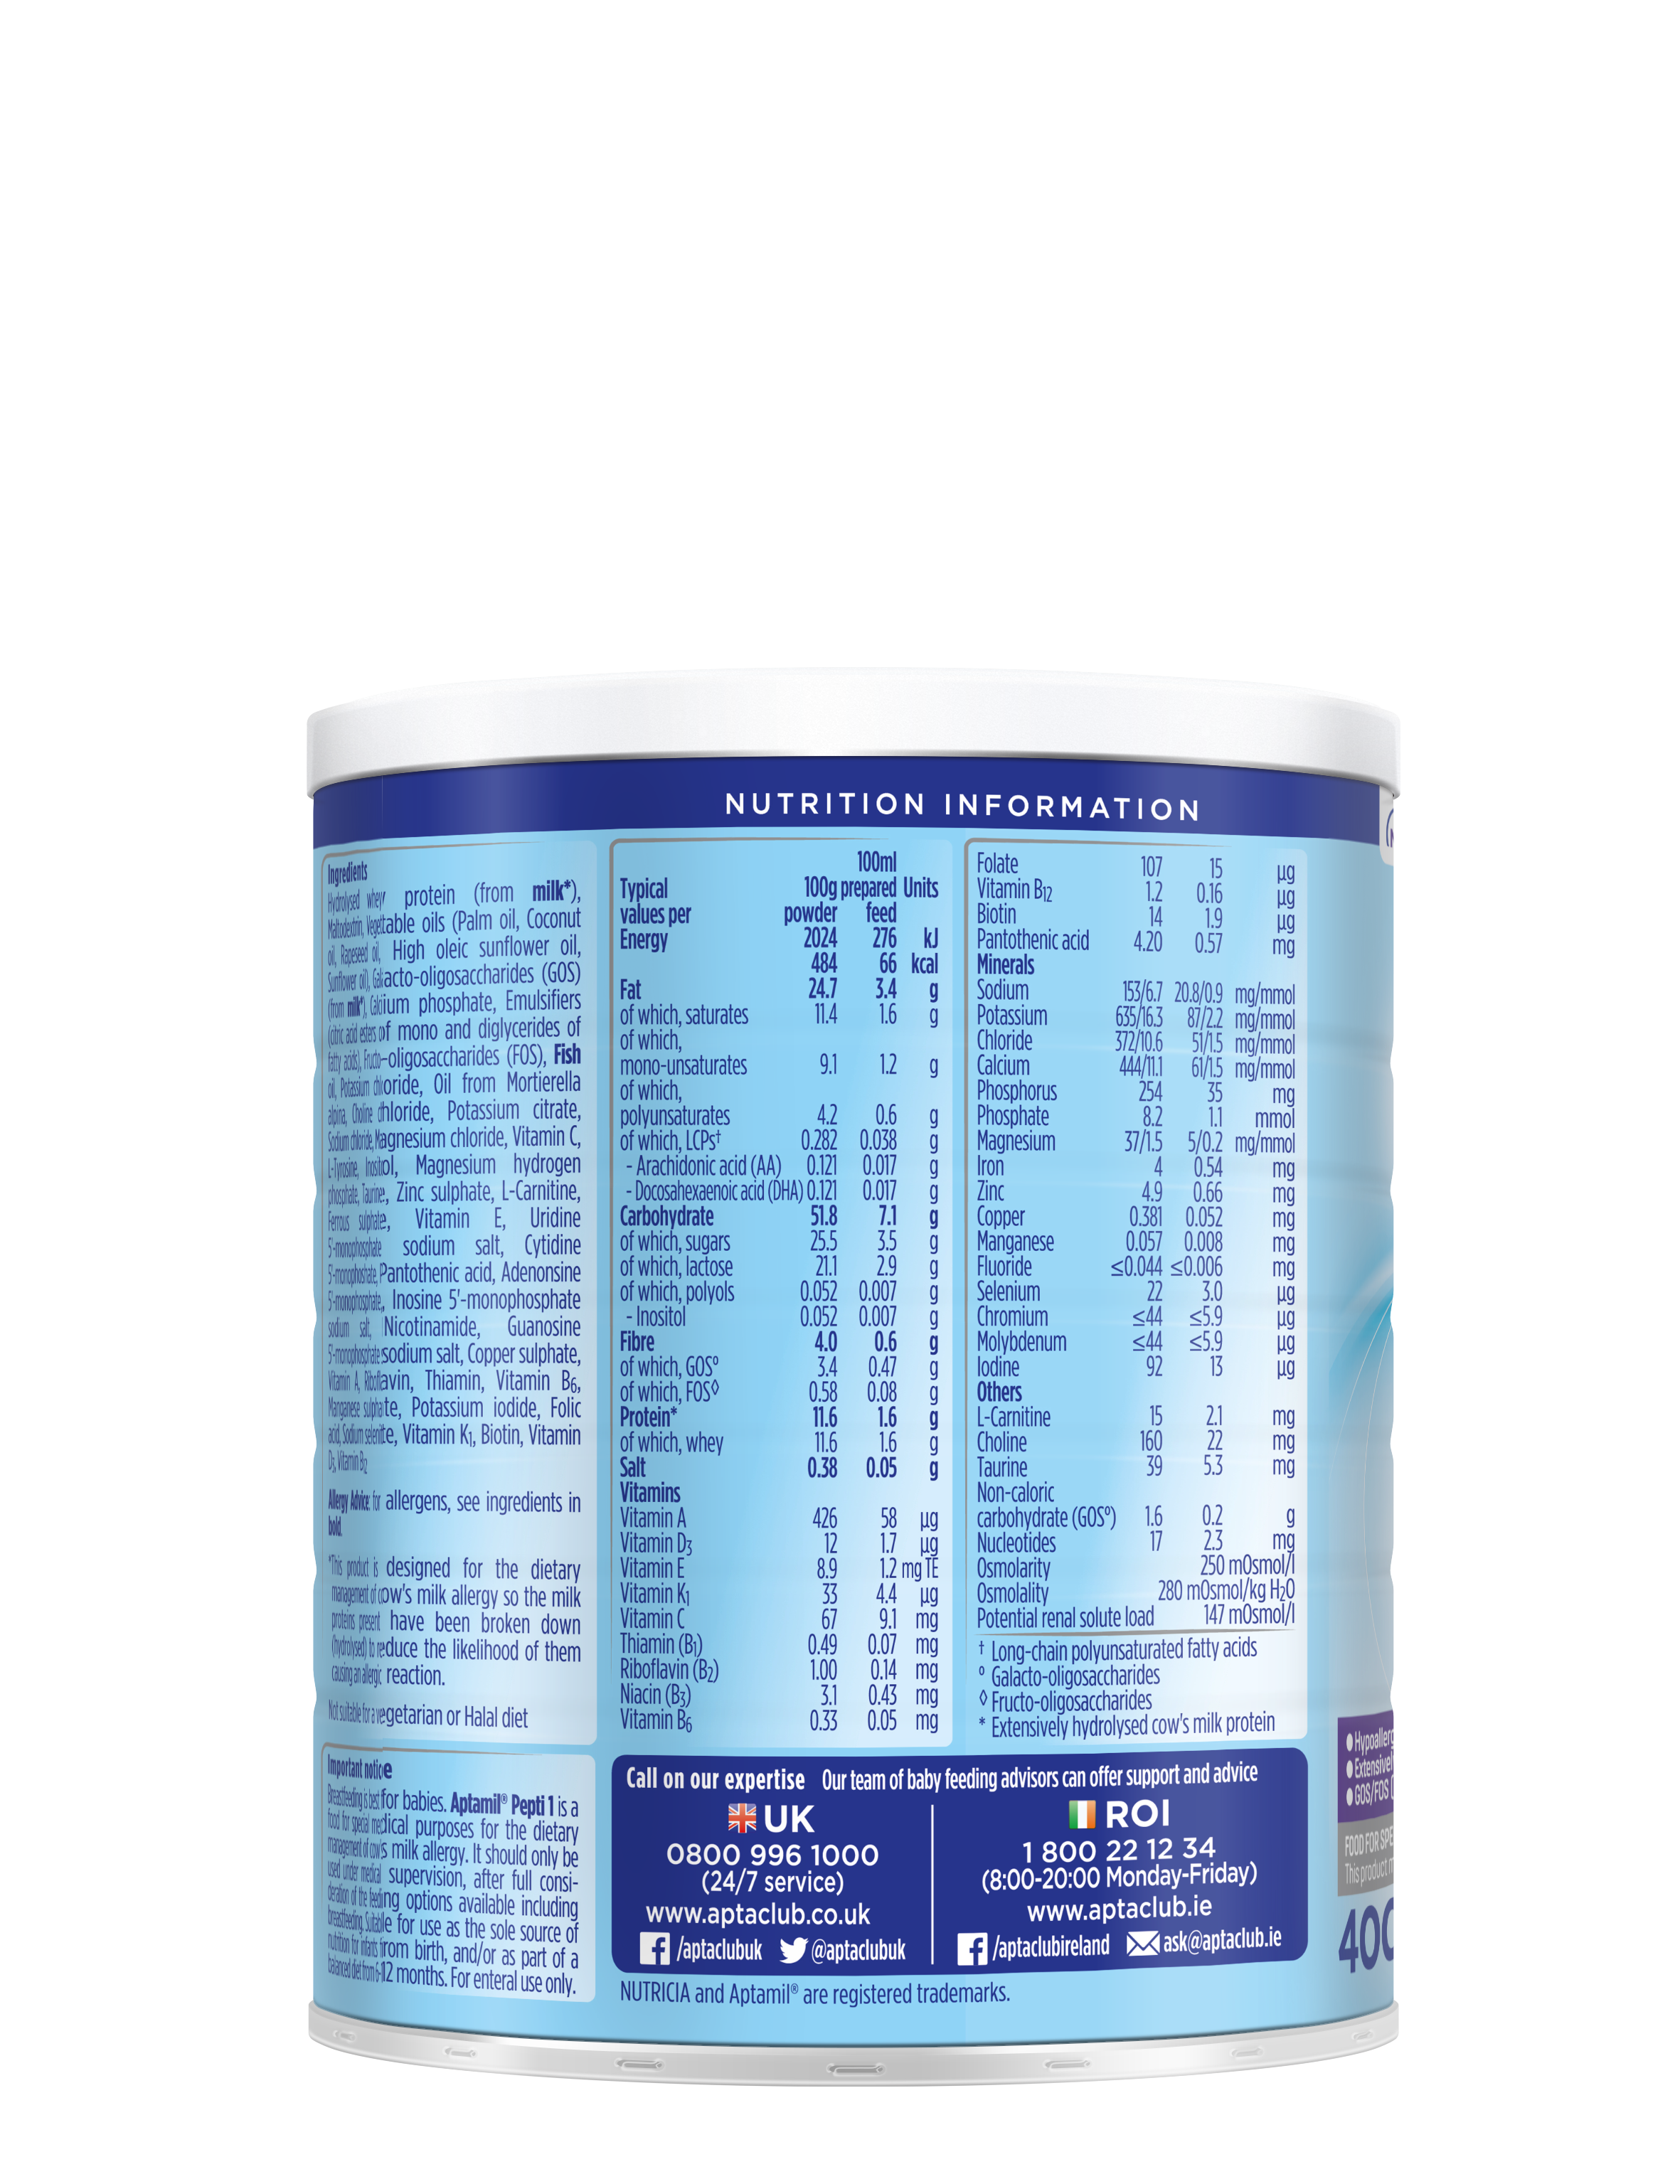 Aptamil® Pepti 1 400g Tin Extensively Hydrolysed Formula